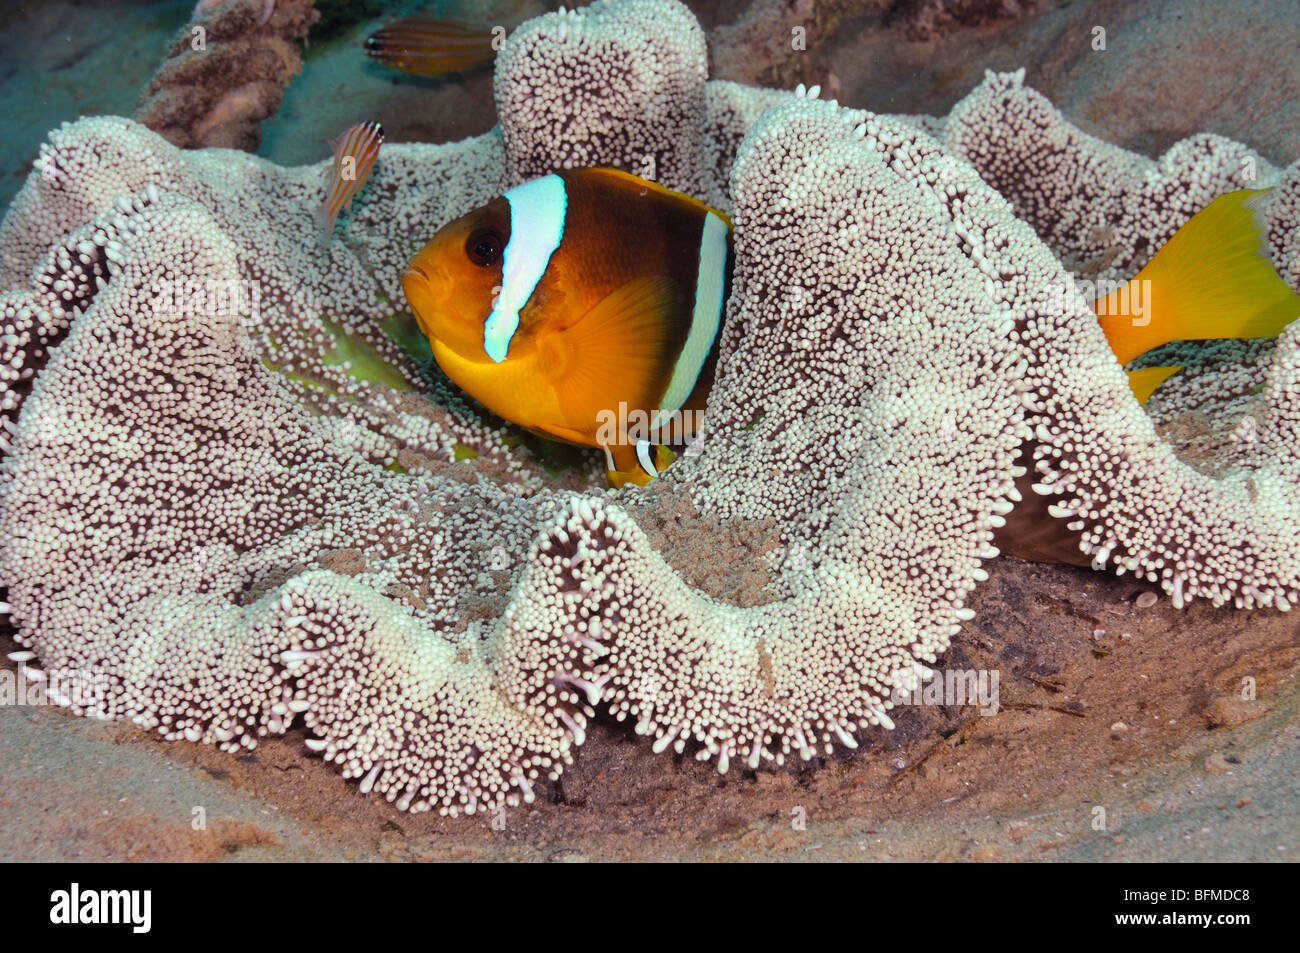 Haddon's anemone, Stichodactyla haddoni, with Red Sea anemonefish, Amphiprion bicinctus. "Red Sea" Stock Photo